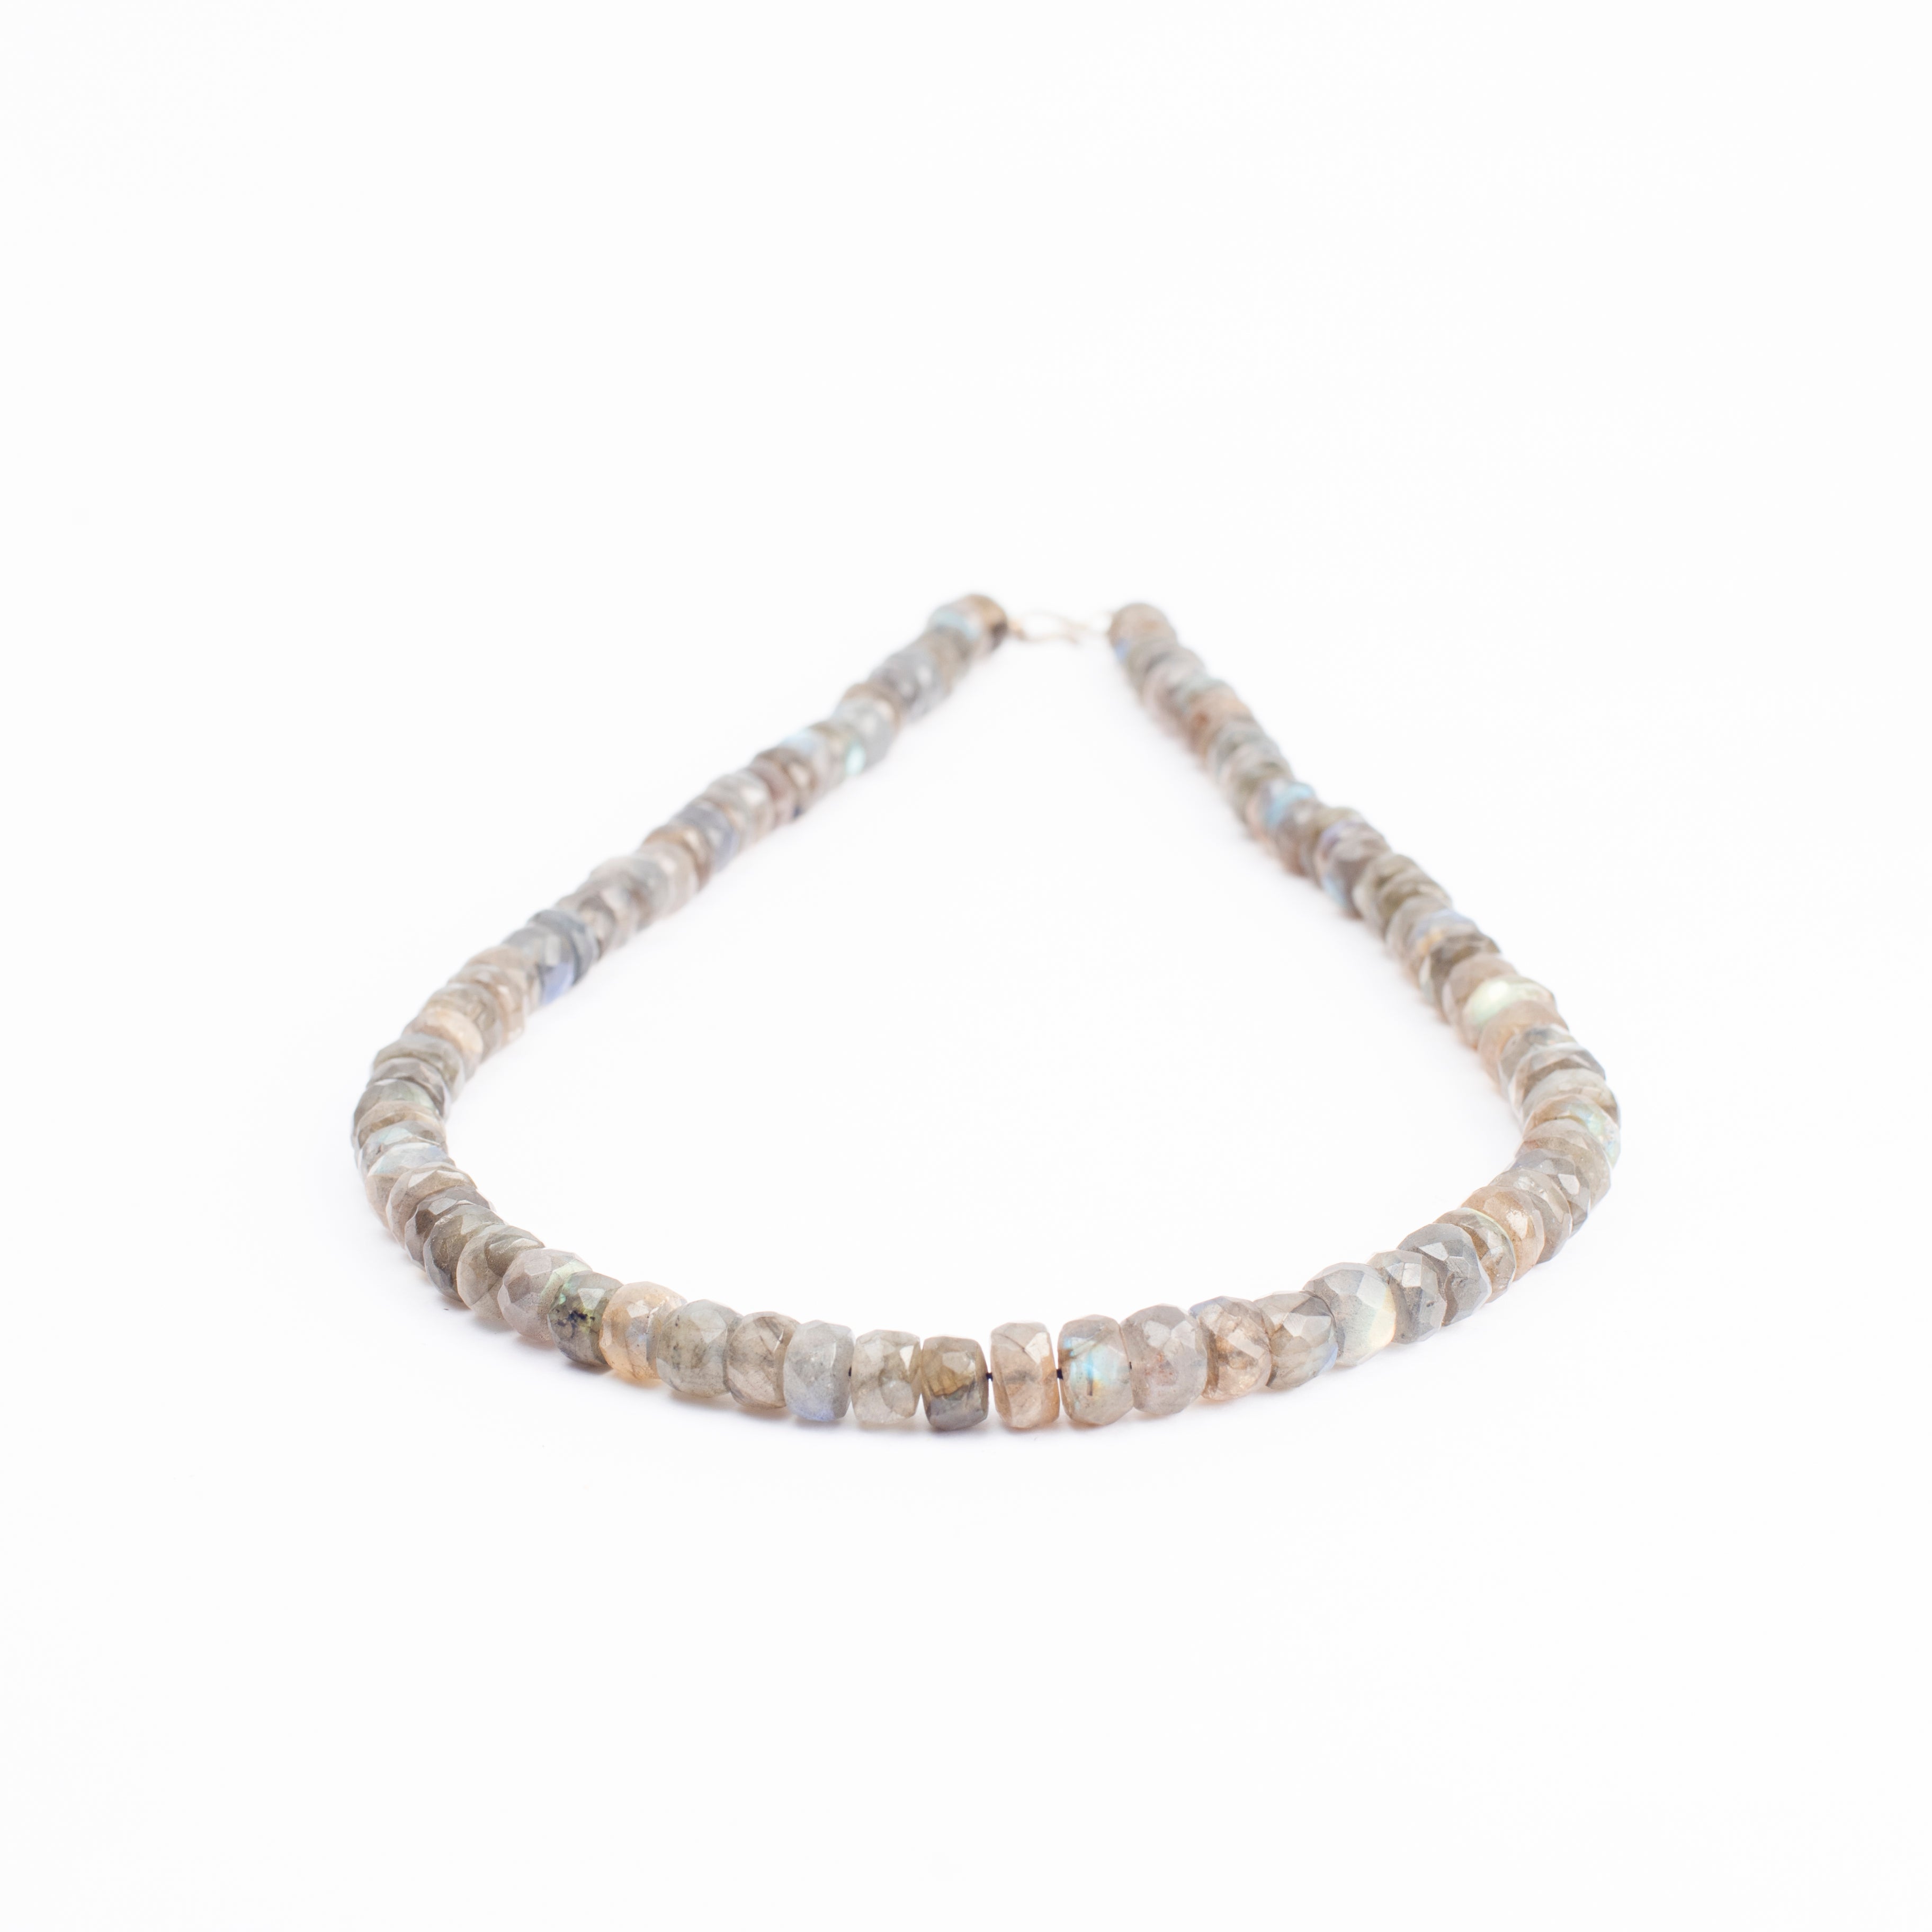 Labradorite Oval Cut Beads Necklace